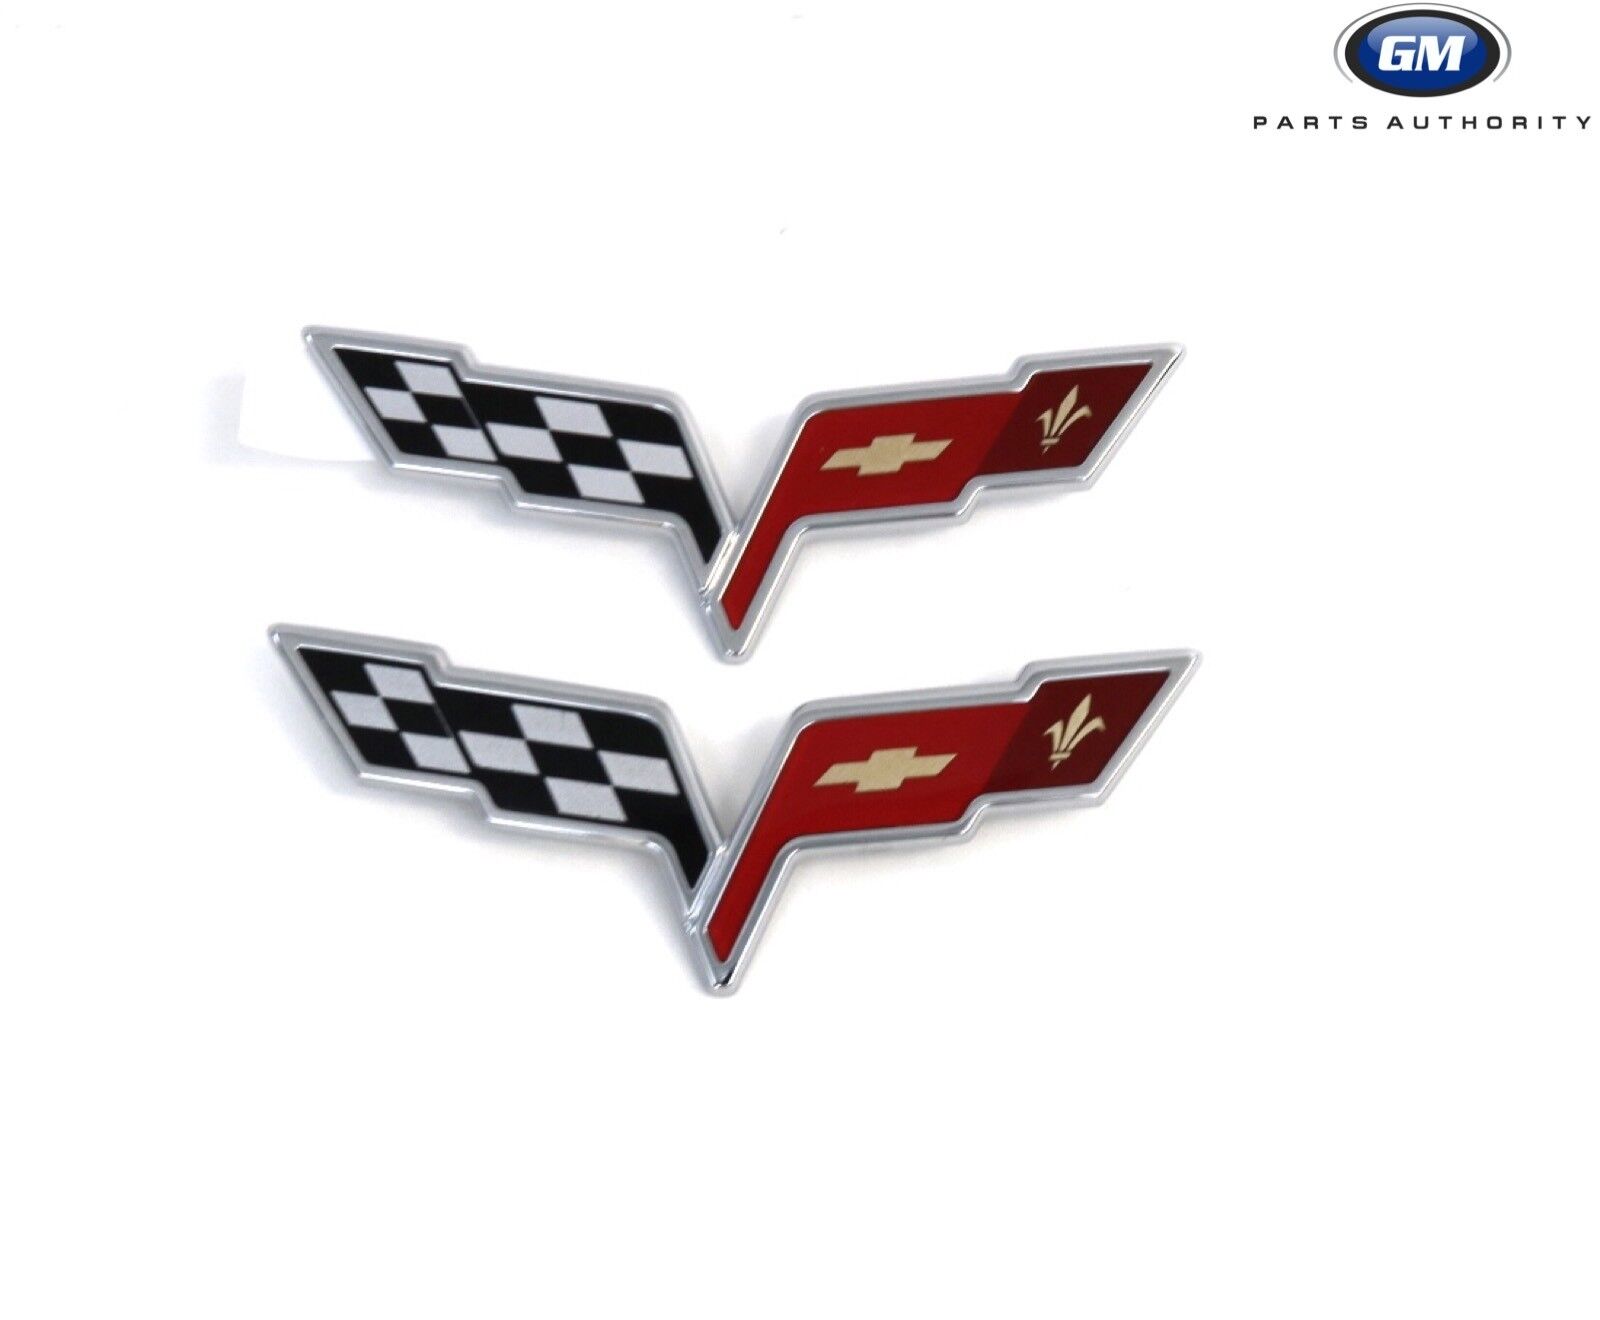 2005-2013 Chevrolet Corvette C6 Front & Rear Emblems Chrome Crossed Flags OEM GM